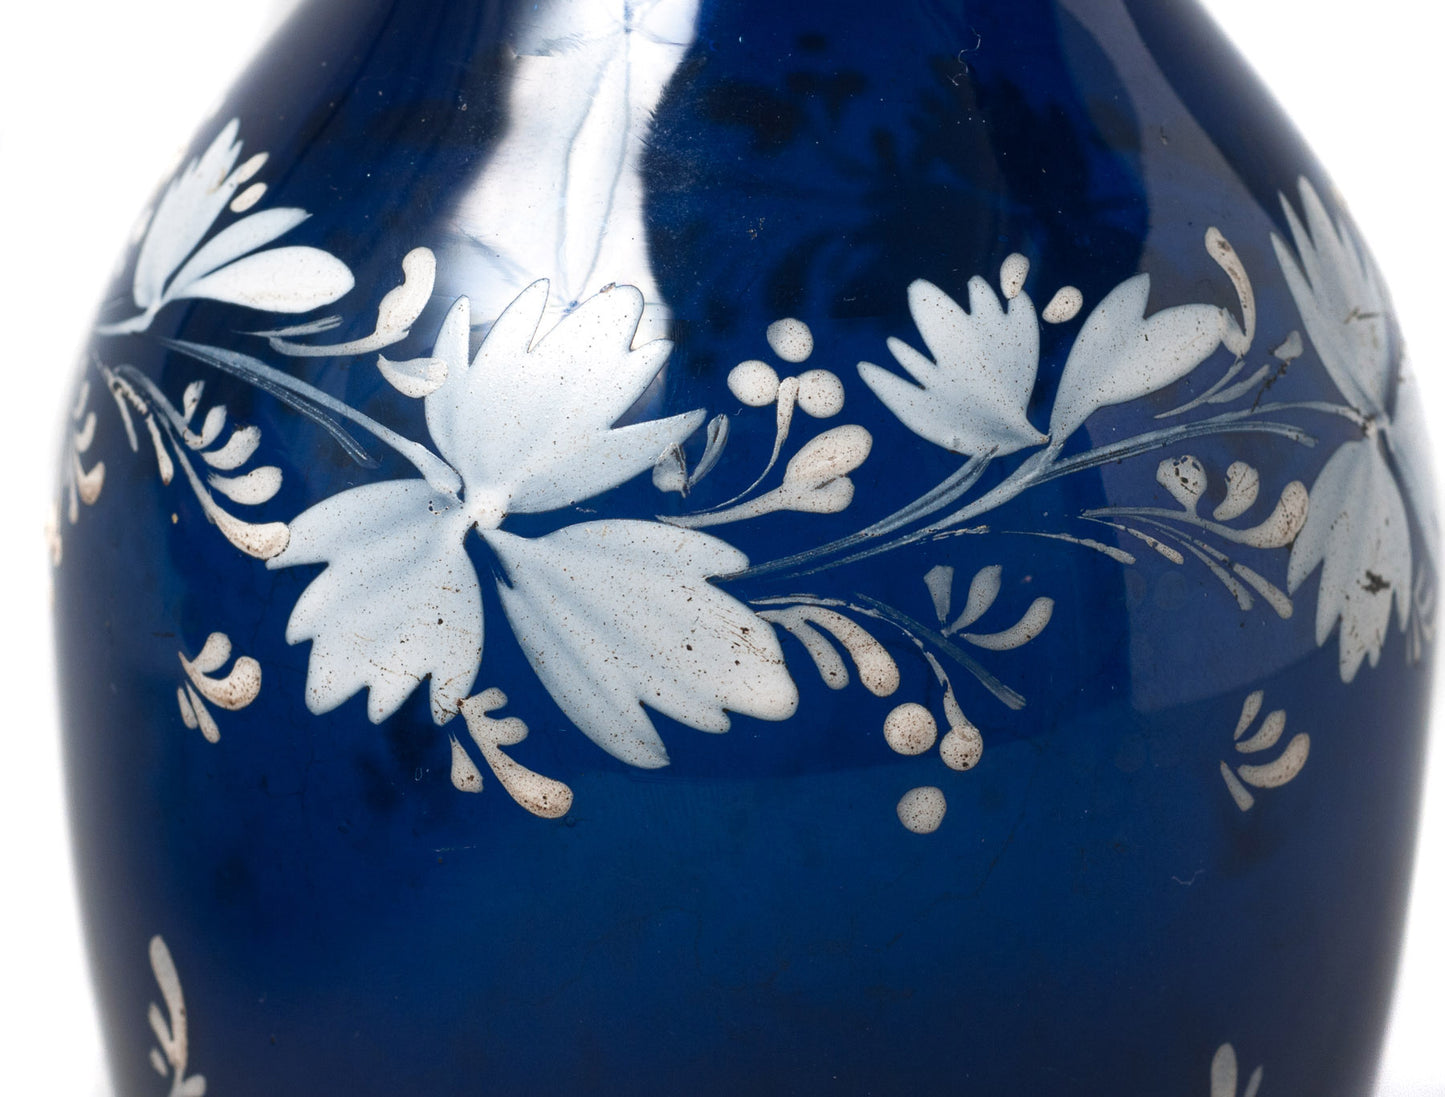 Antique Rare Georgian Bristol Blue Glass Decanter with Hand Painted Enamel c1790 (Code 0323)